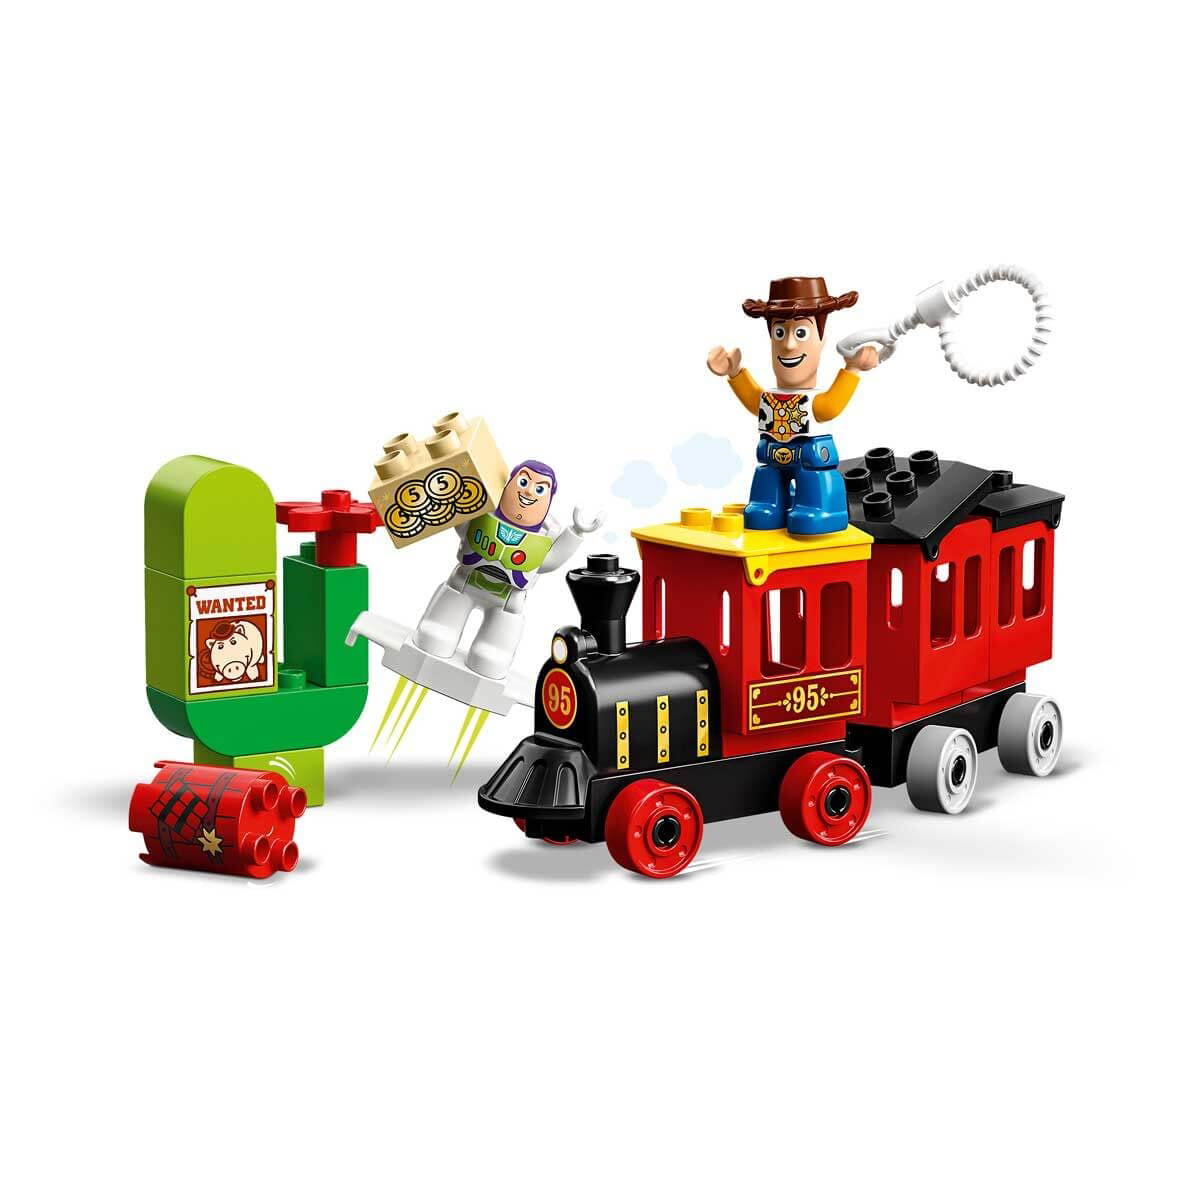 LEGO DUPLO Toy Story Train Building Set 10894 